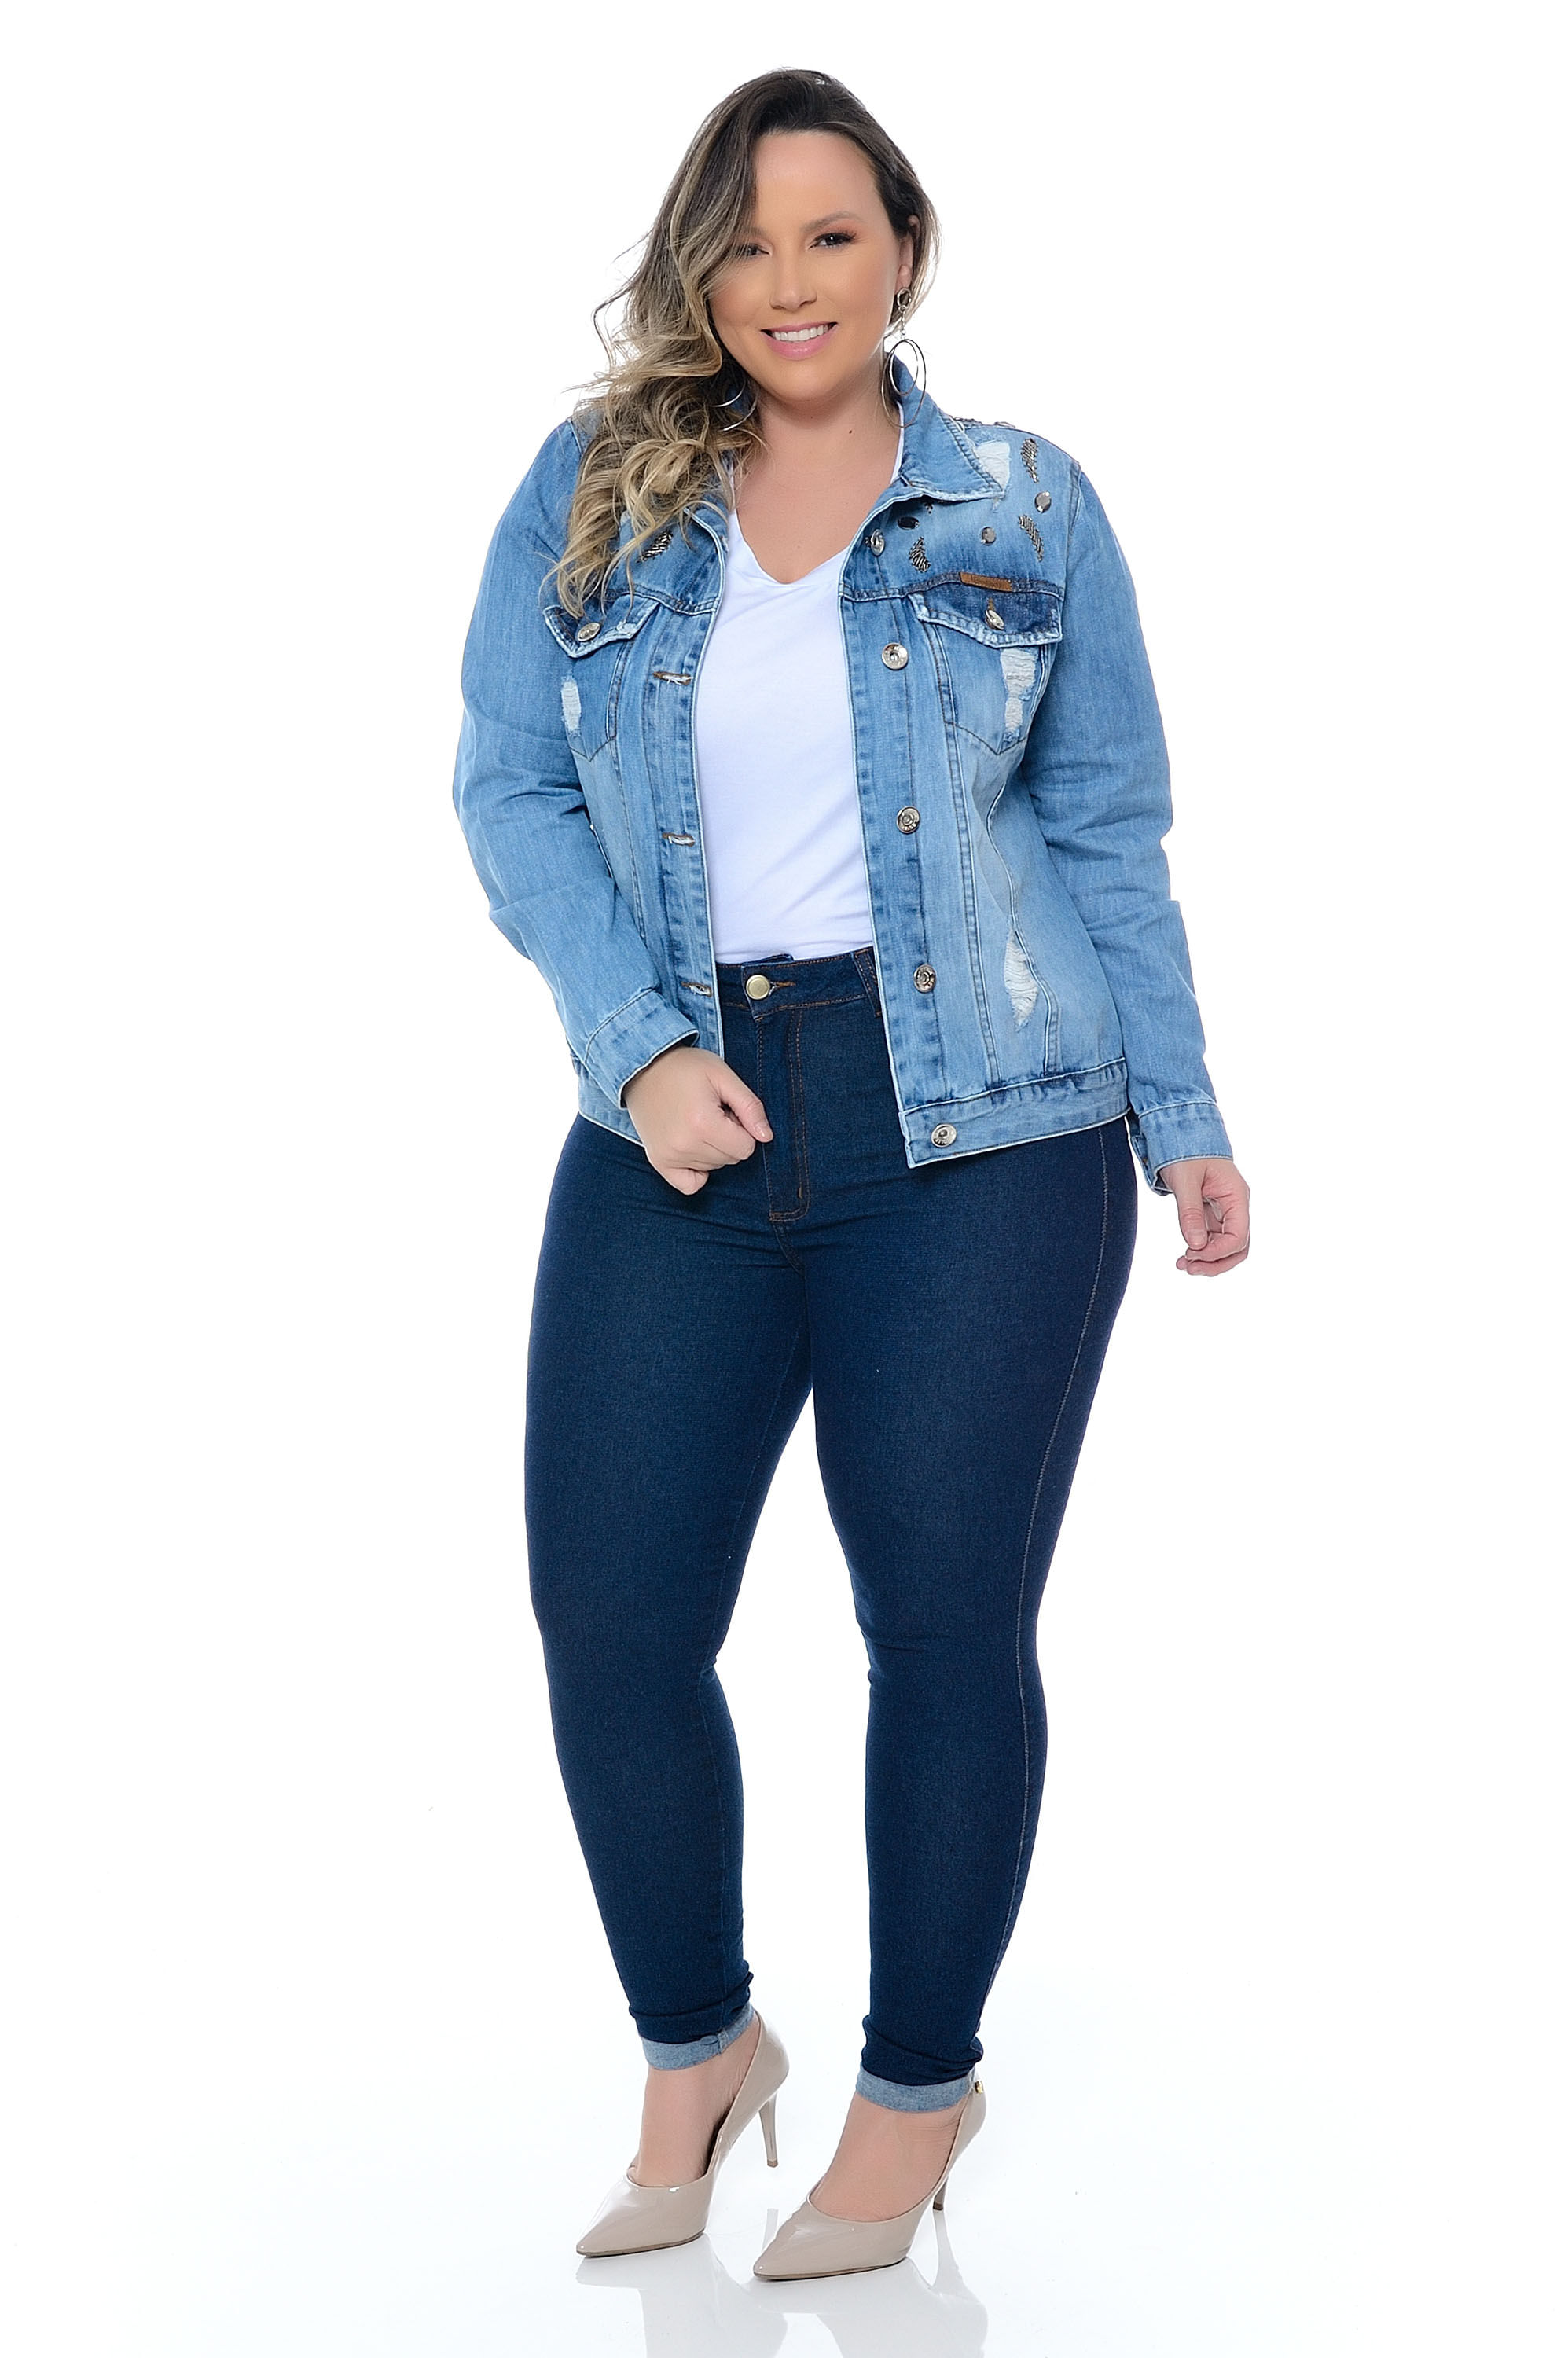 blusa jeans feminina plus size